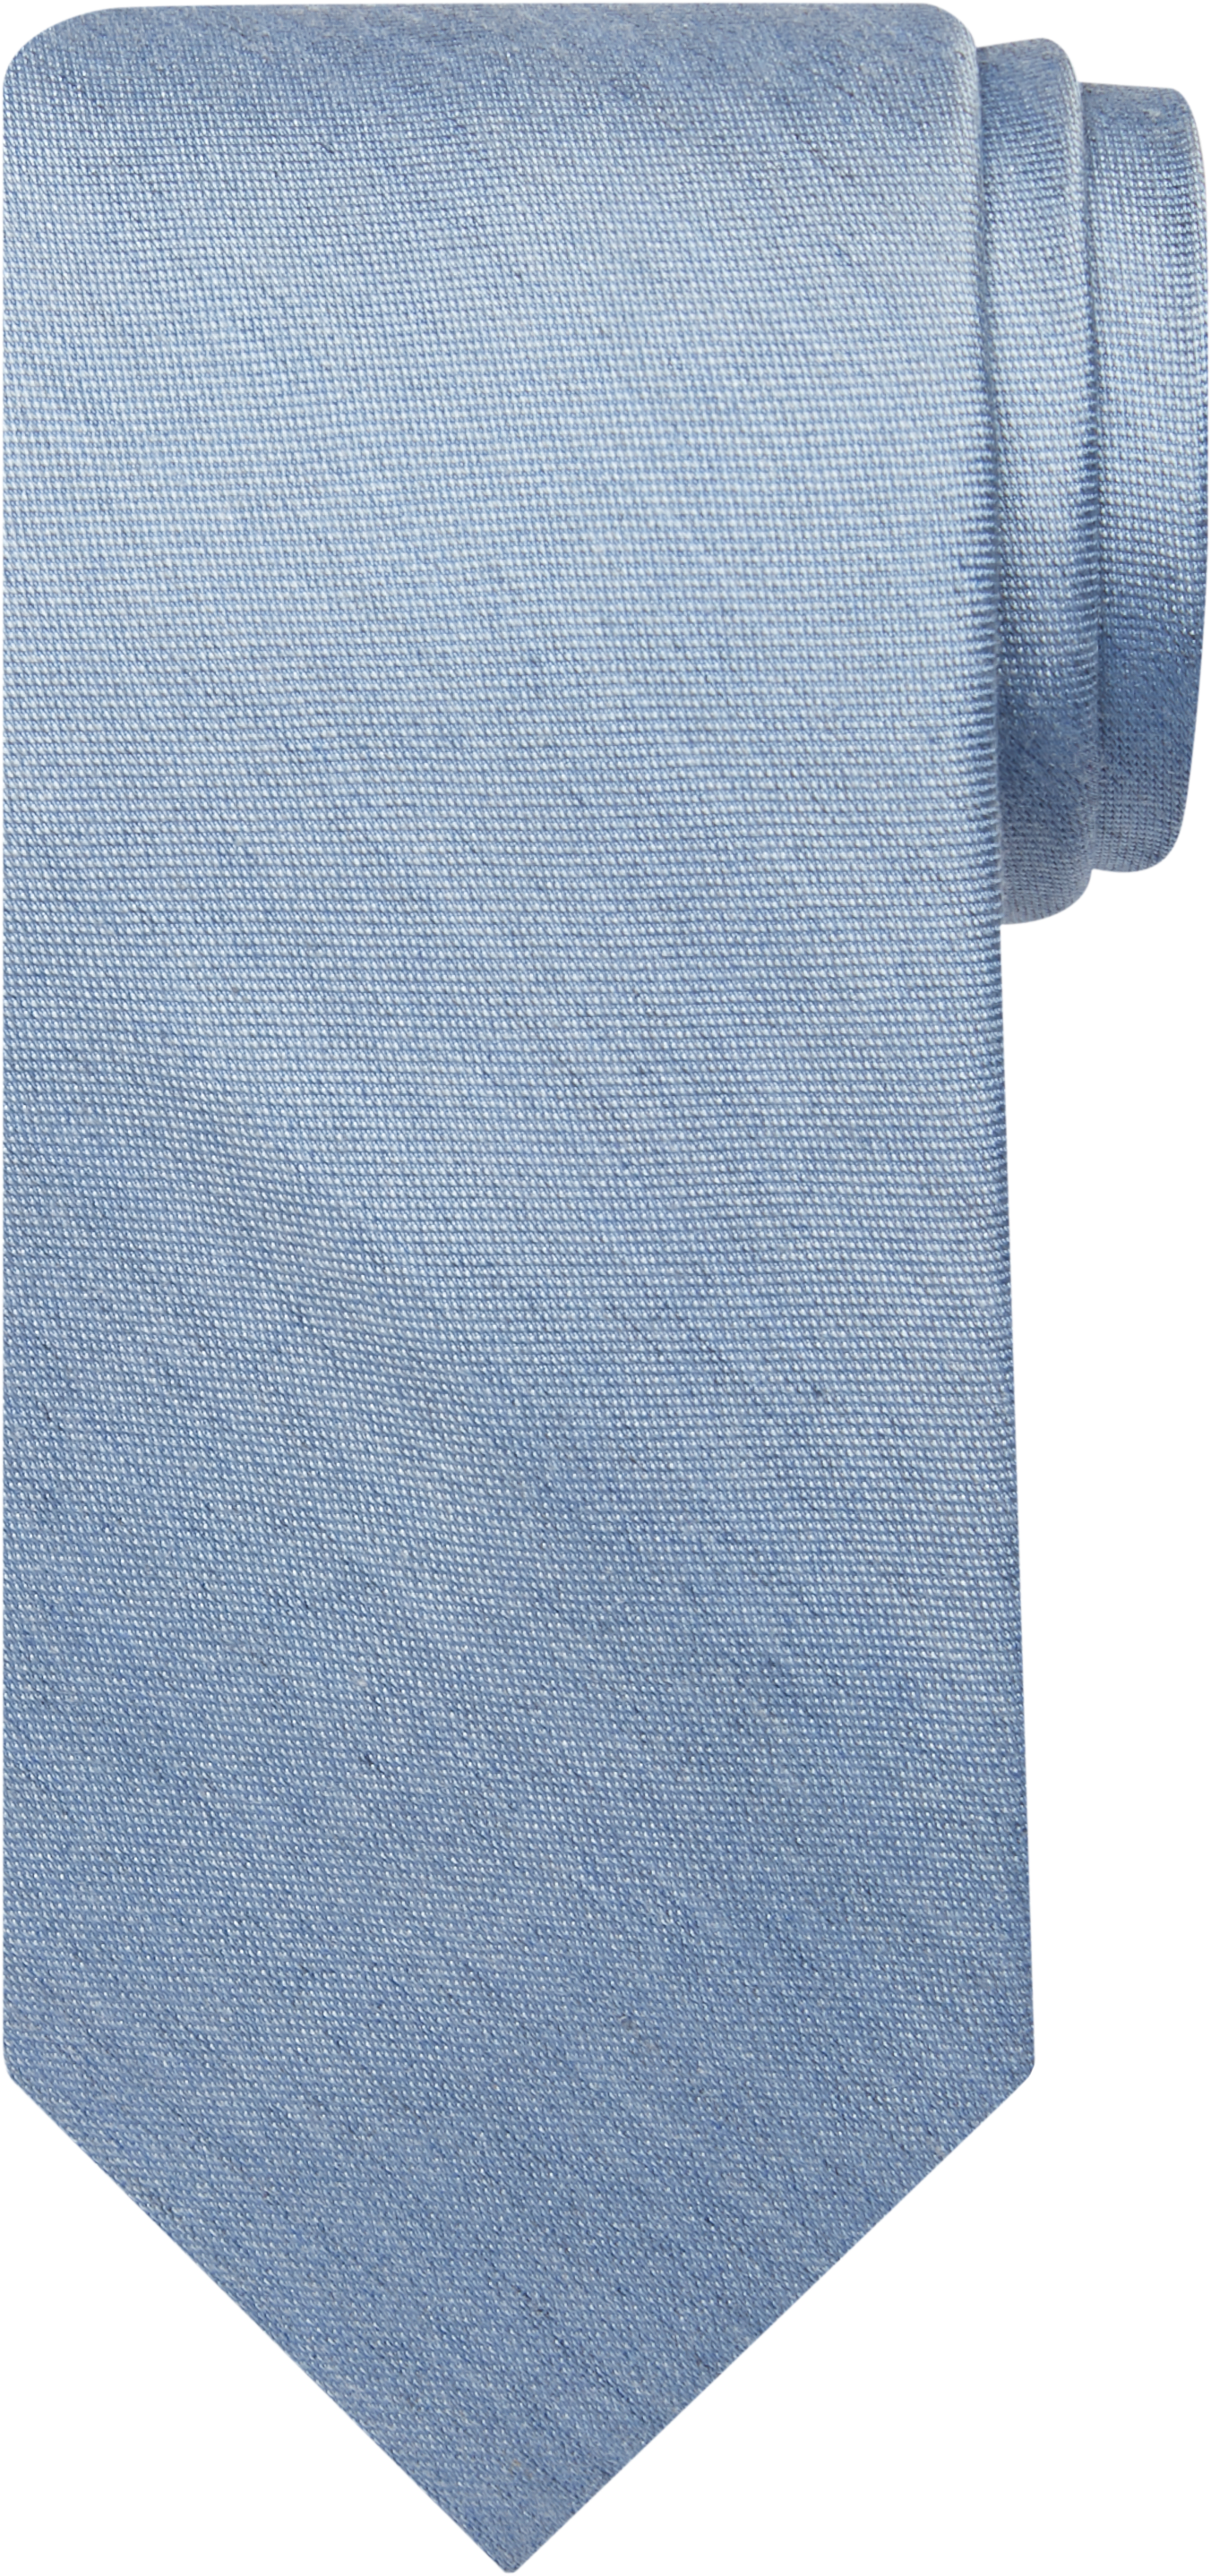 Calvin Klein Blue Textured Narrow Tie - Men's Accessories | Men's Wearhouse